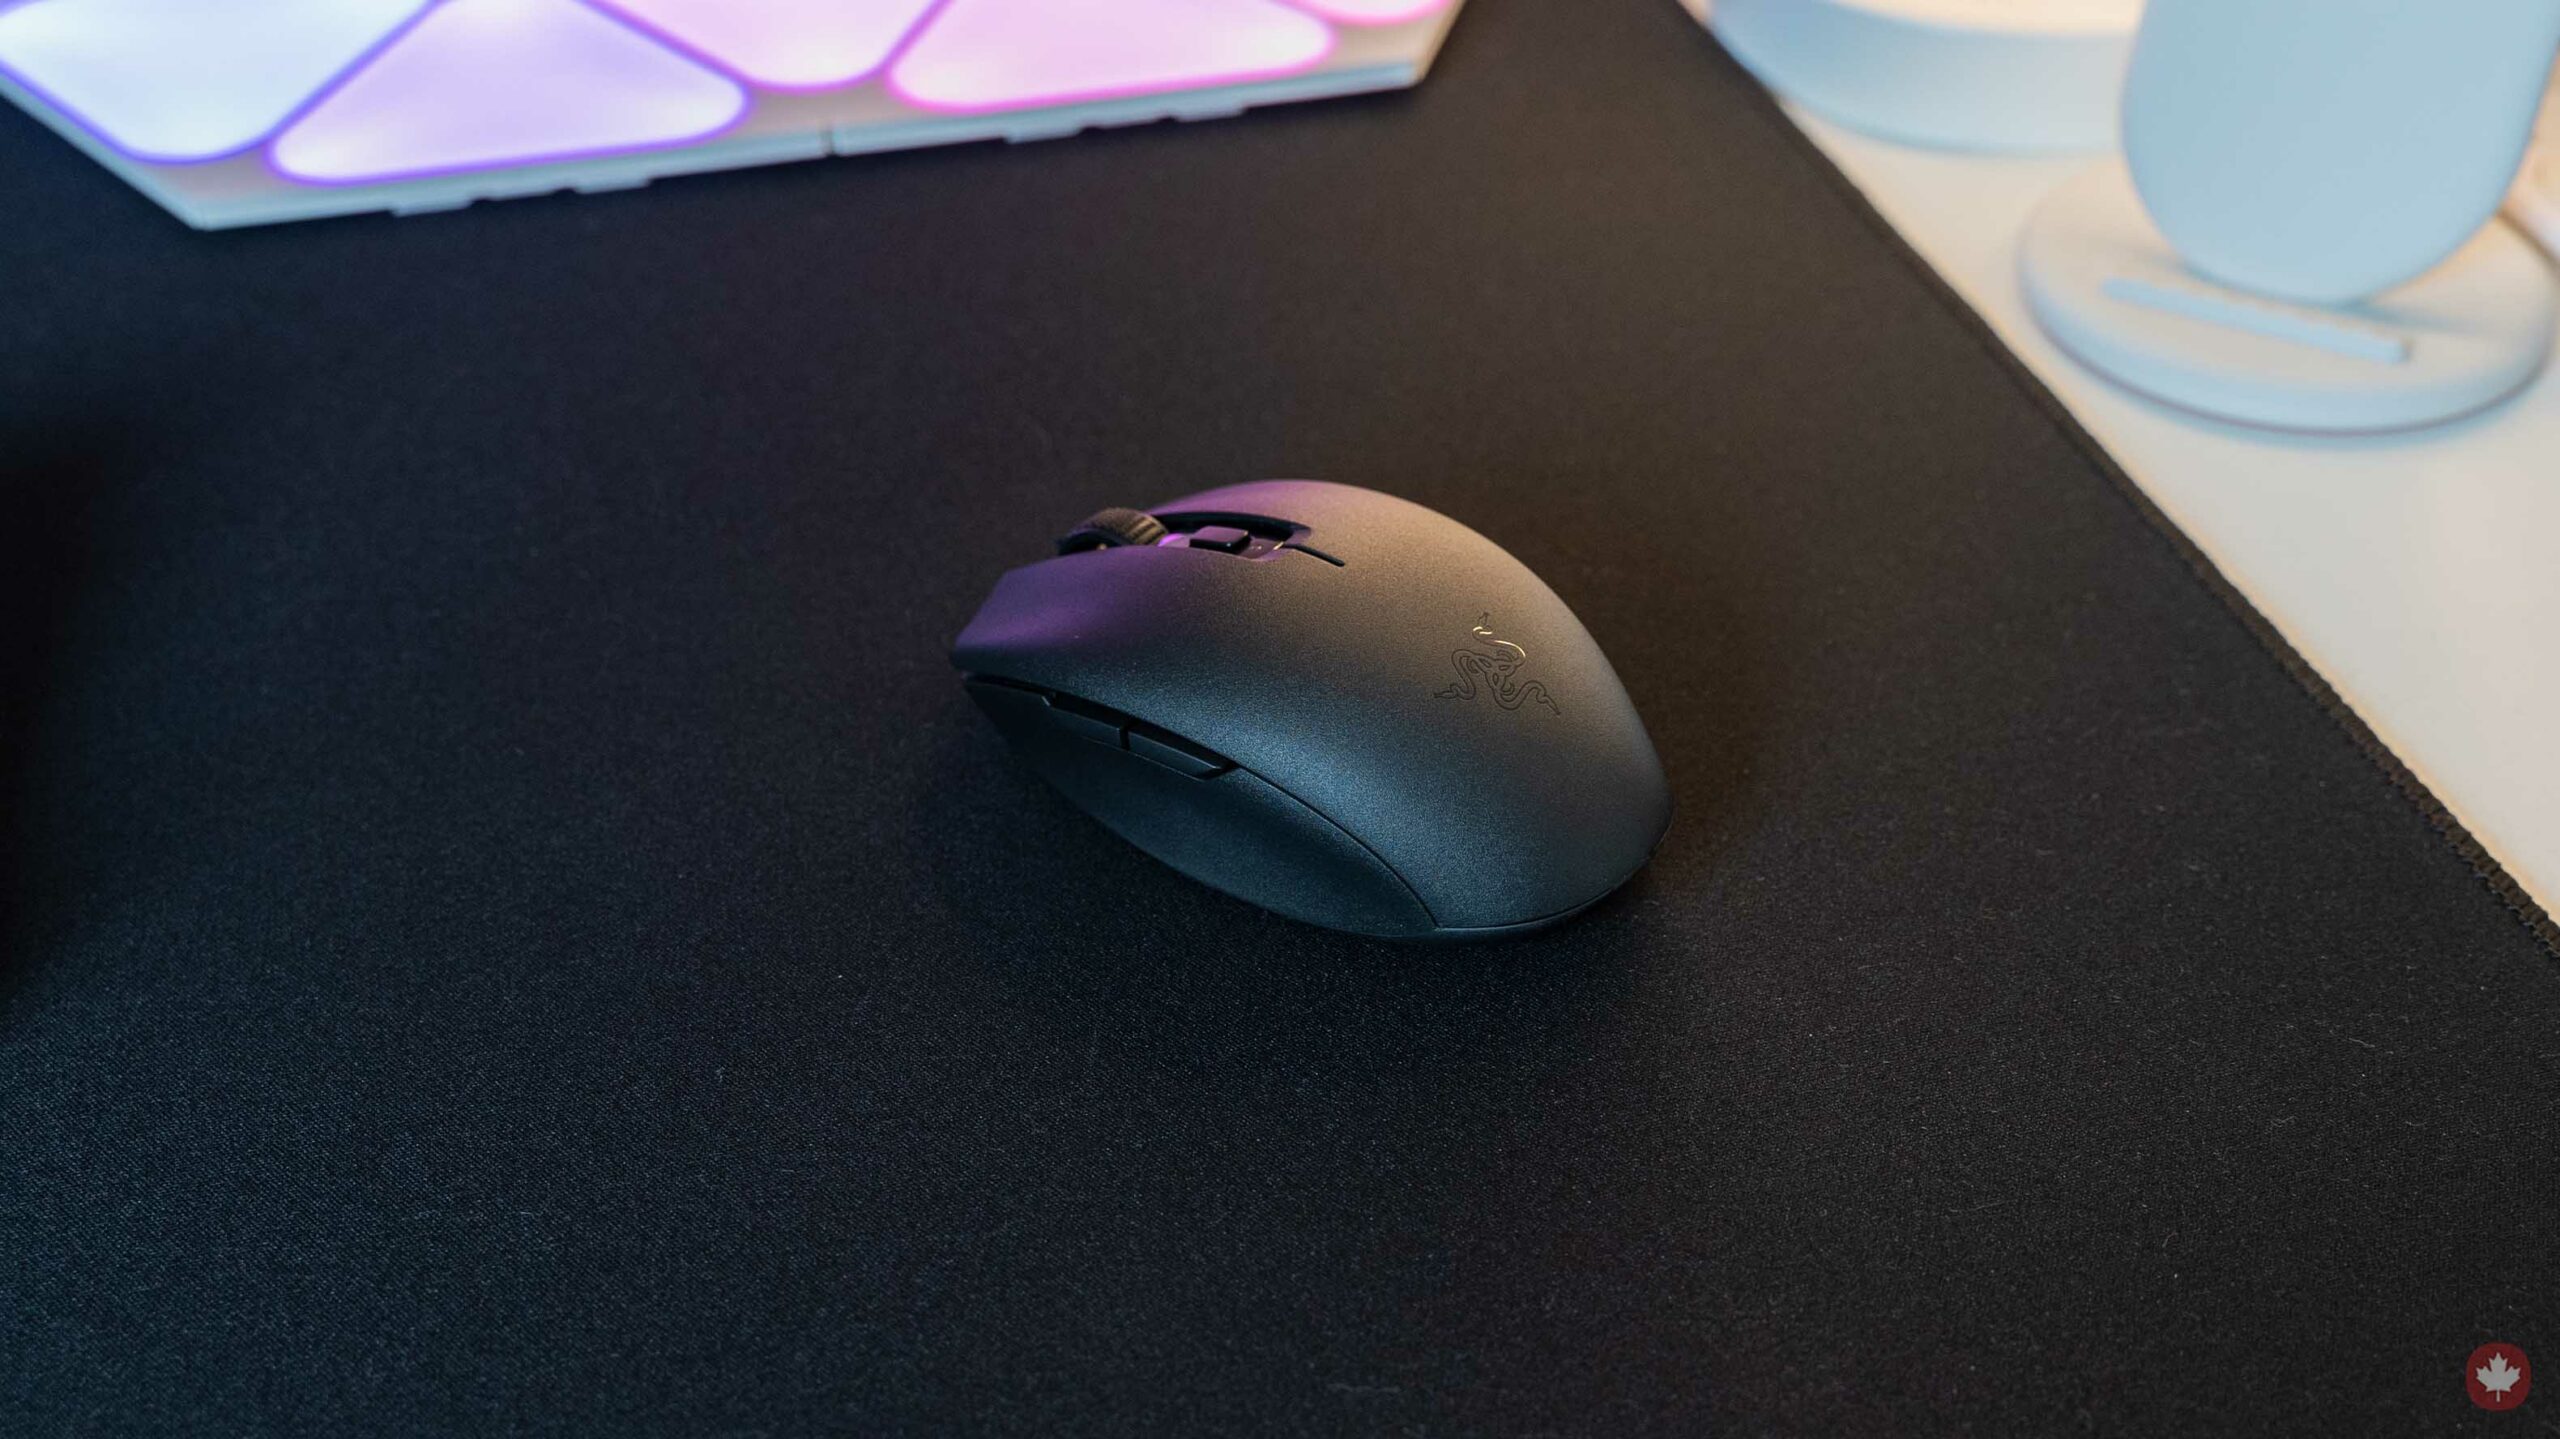 Razer's Orochi V2 mouse proves wireless mice aren't that bad